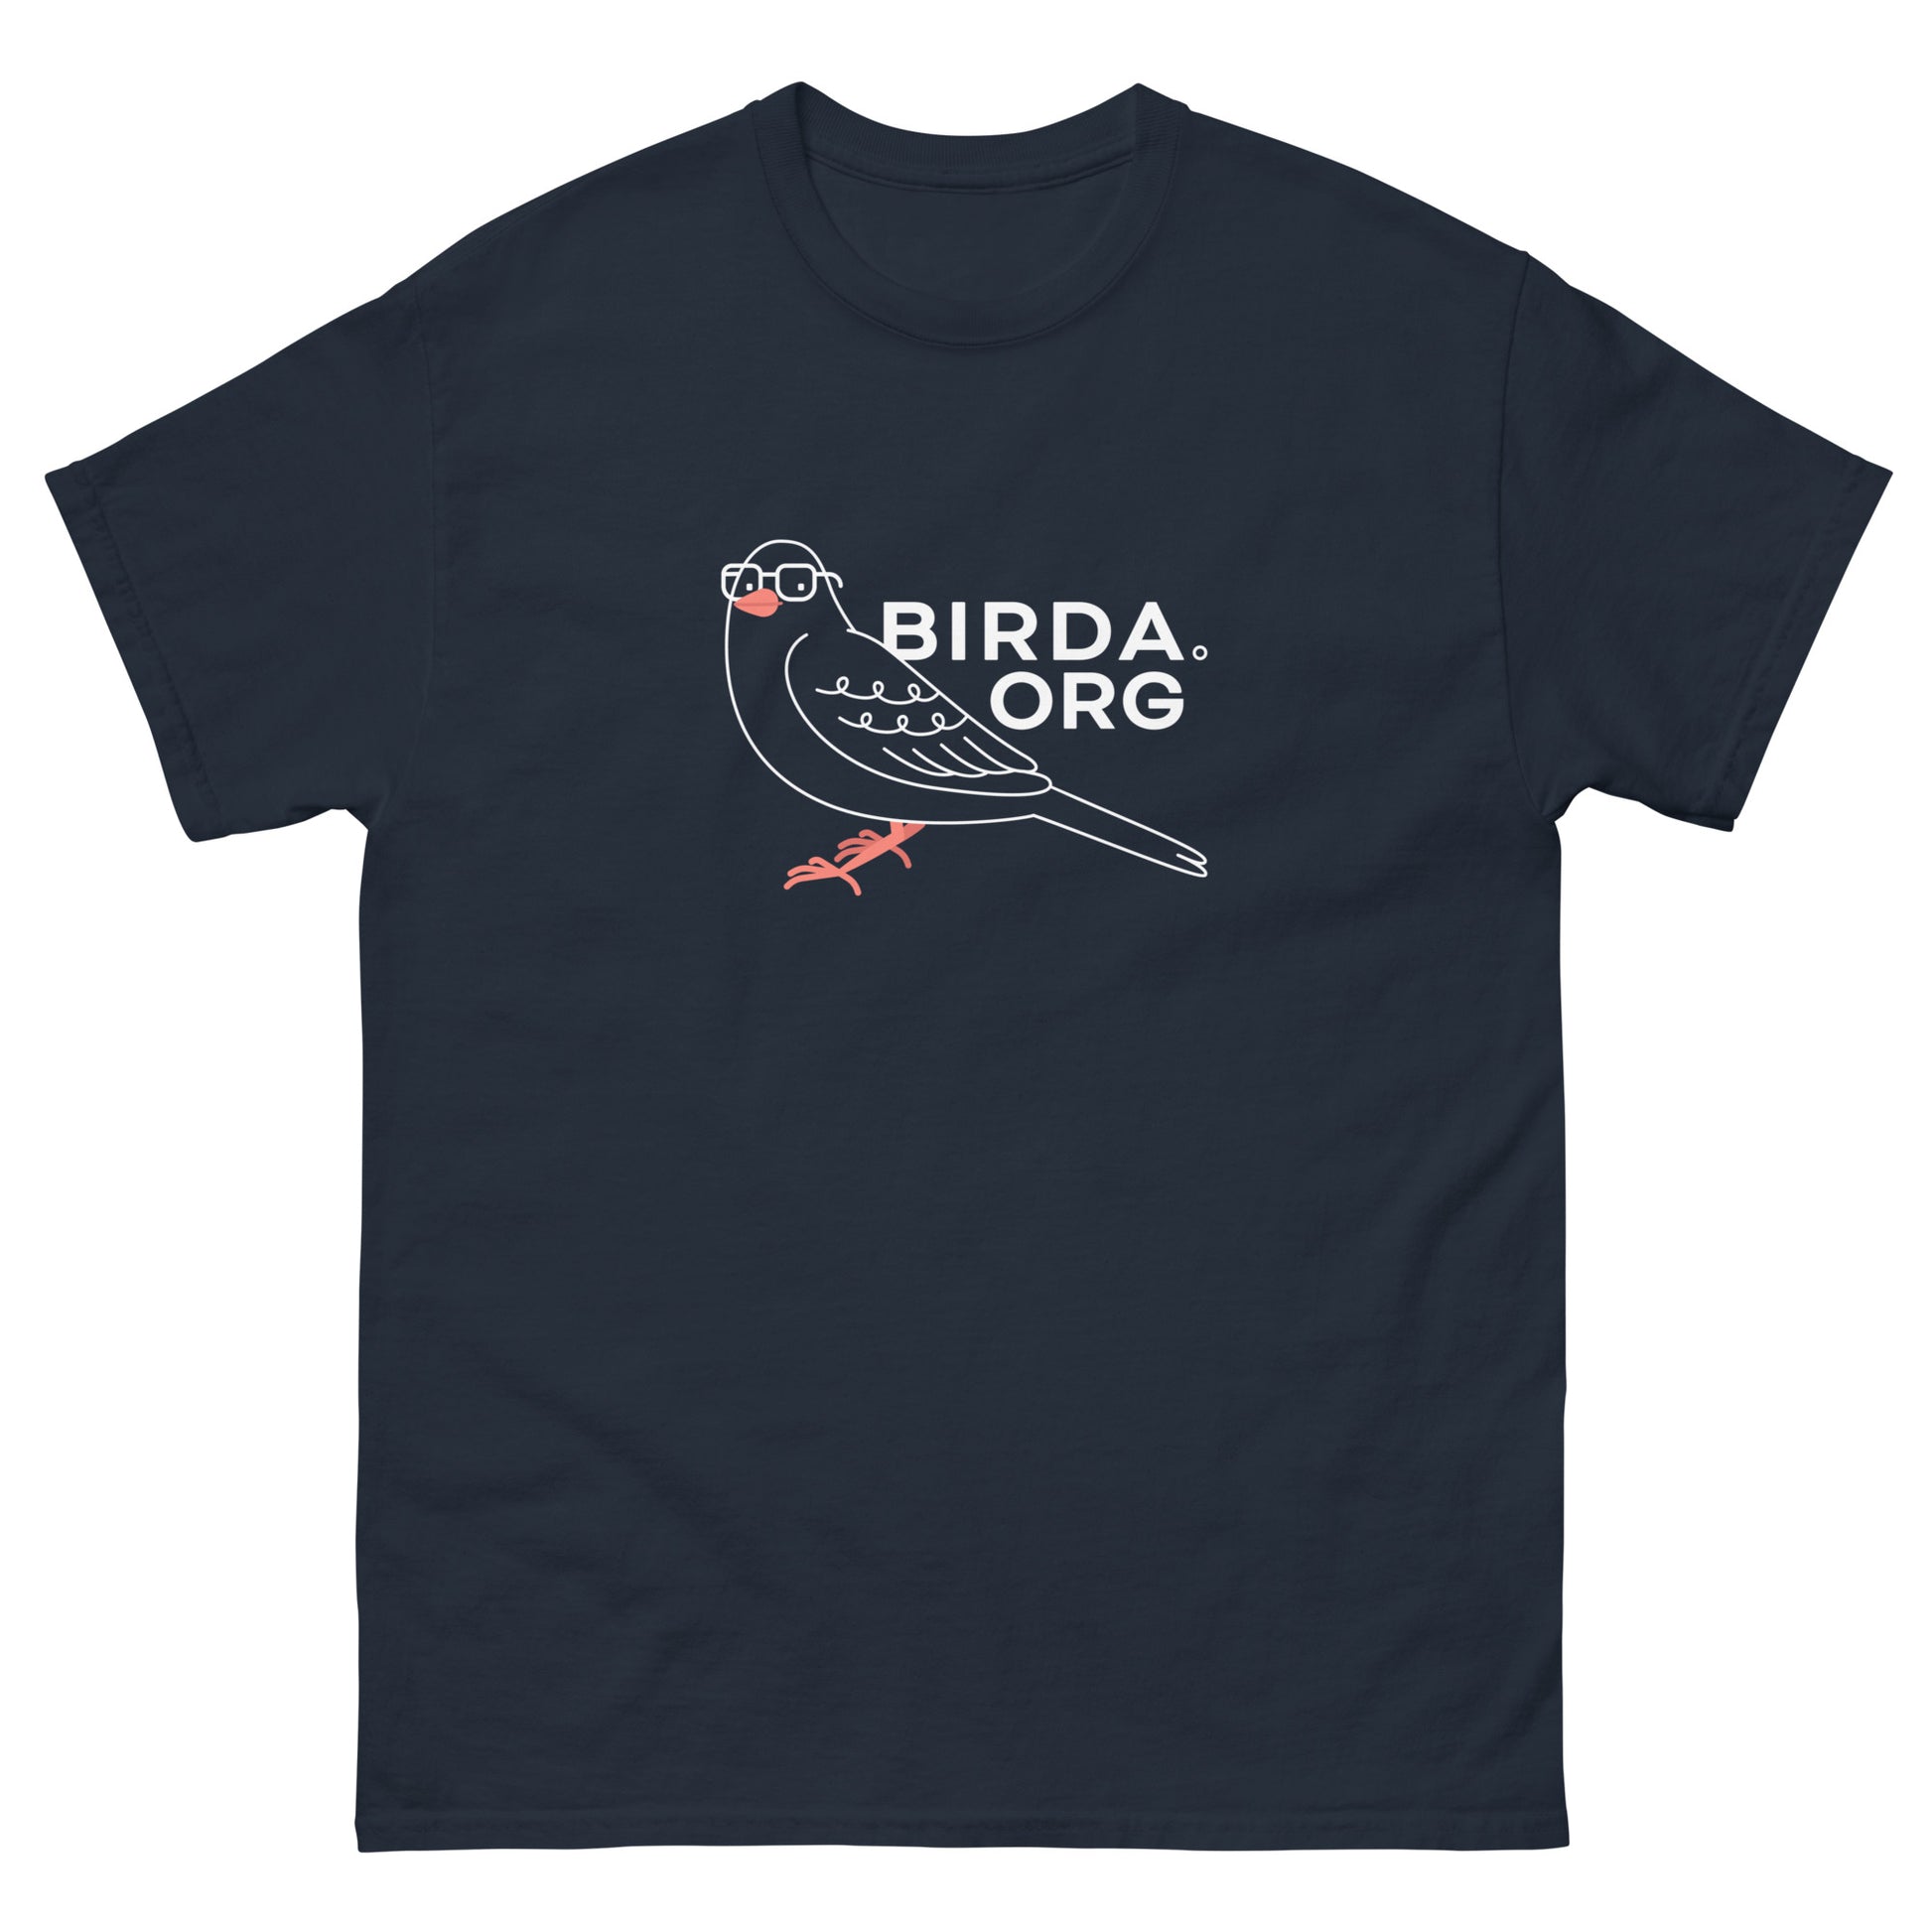 Birda T-shirt in navy